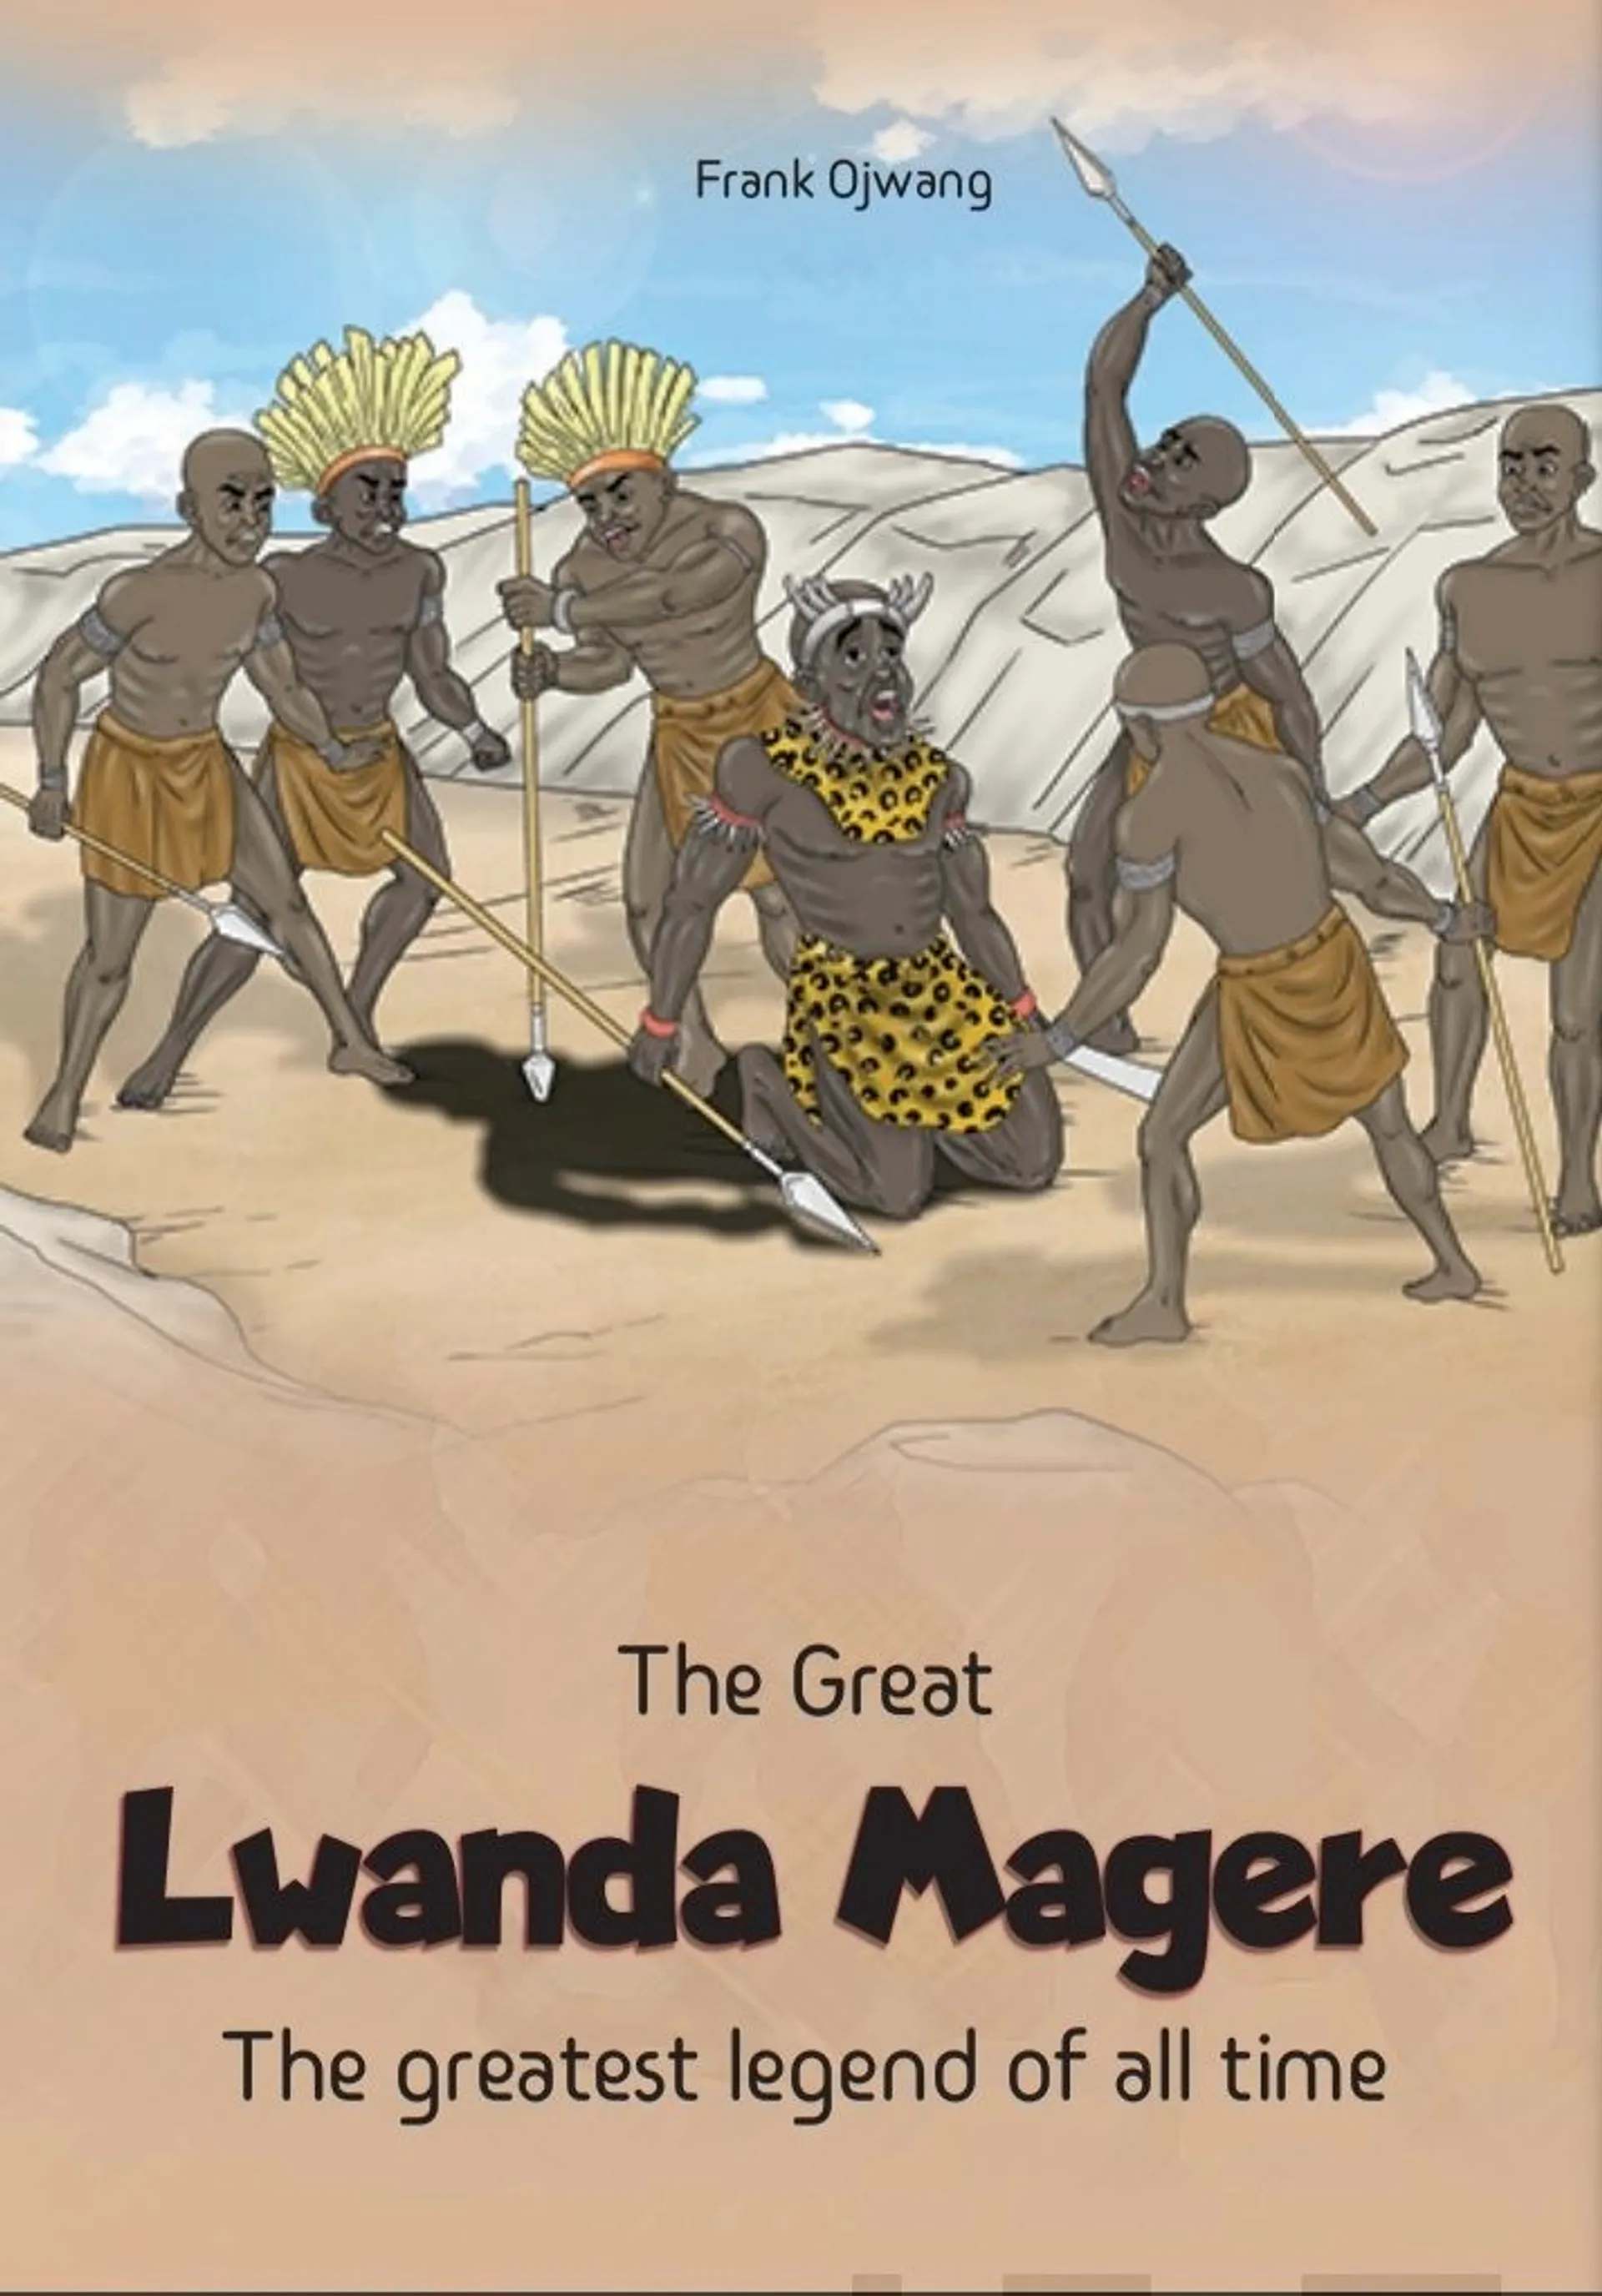 Ojwang, The Great Lwanda Magere